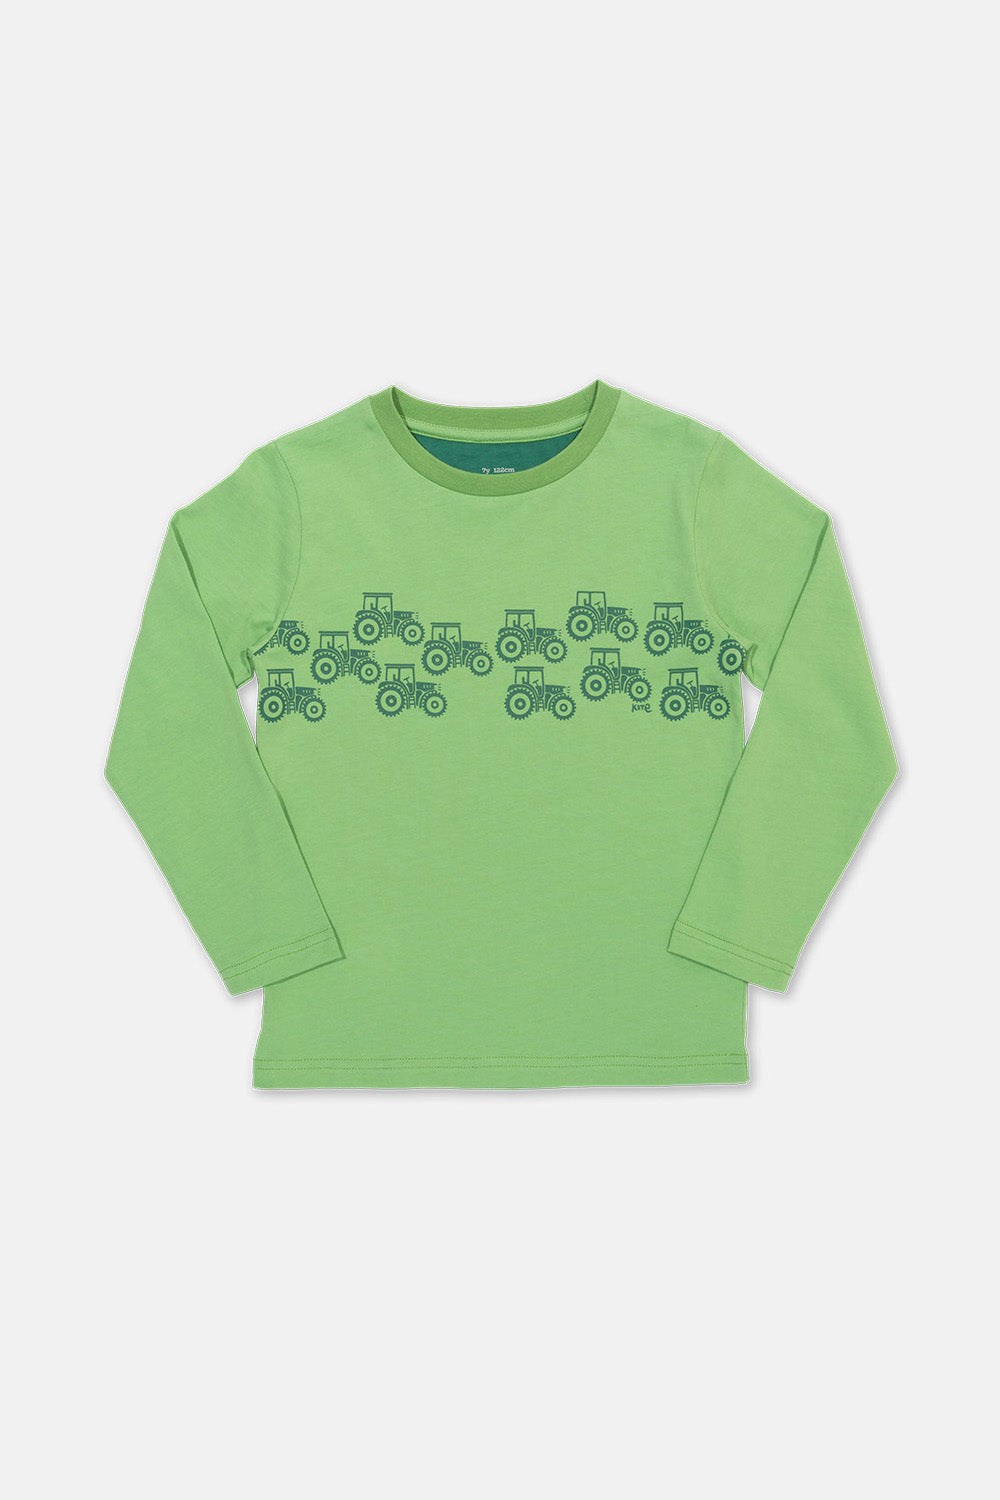 Tractor Treads Baby/Kids Organic Cotton T-Shirt -